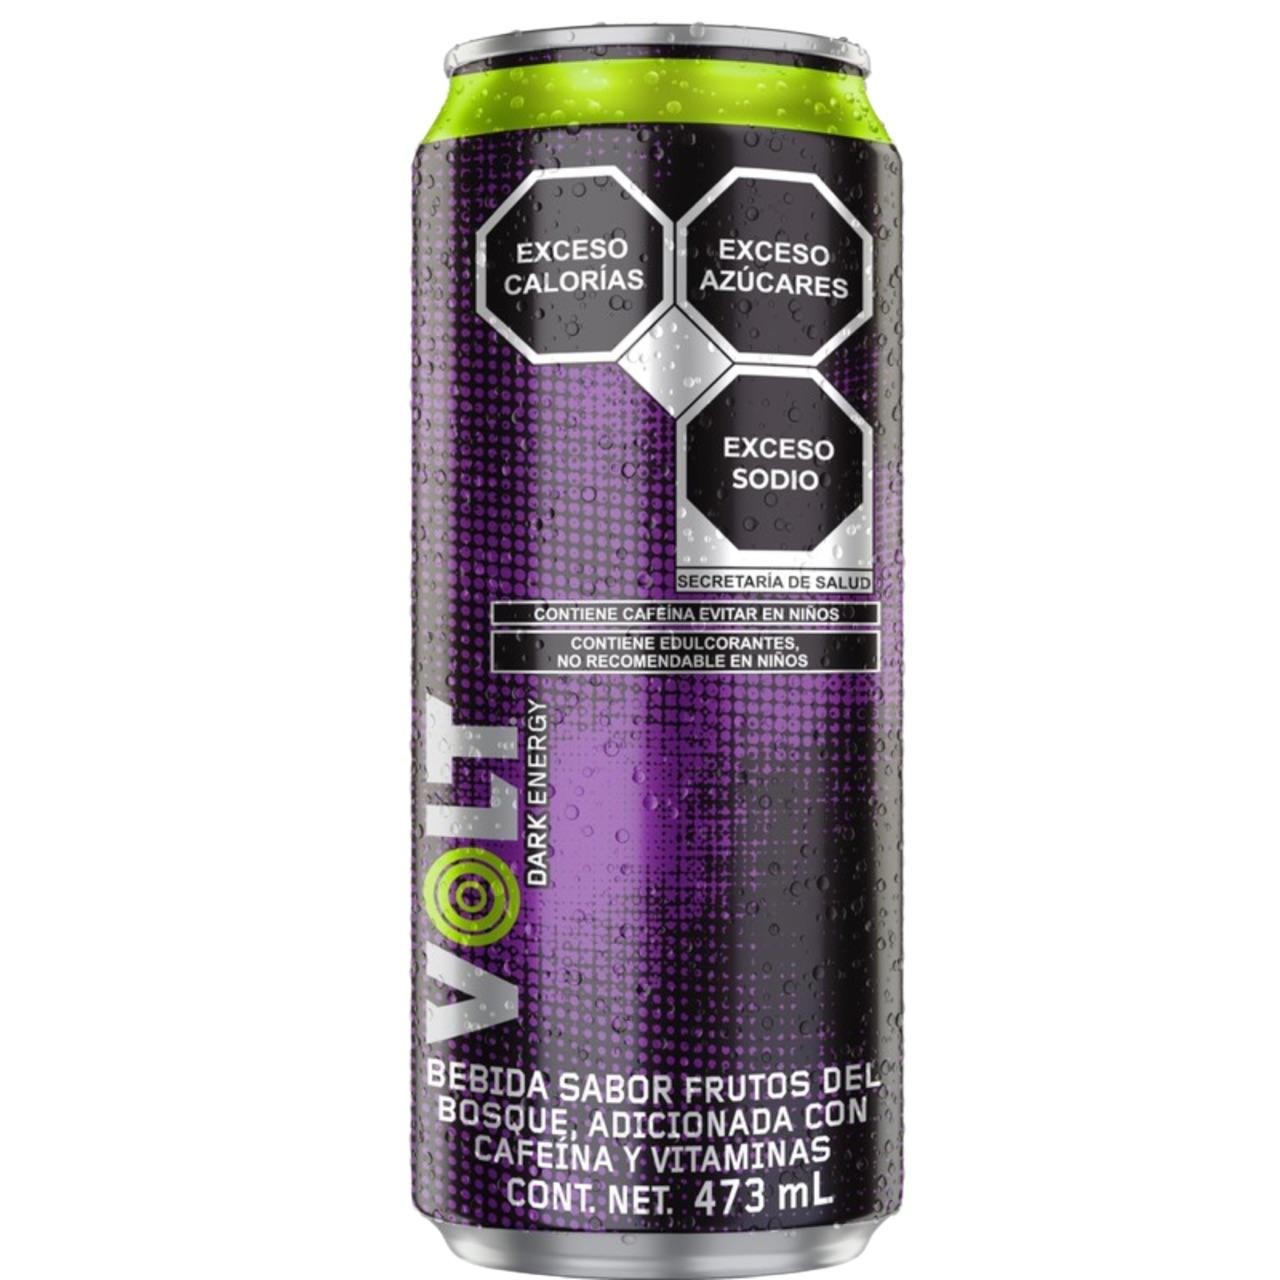 Volt Dark Energy Drink (16oz)